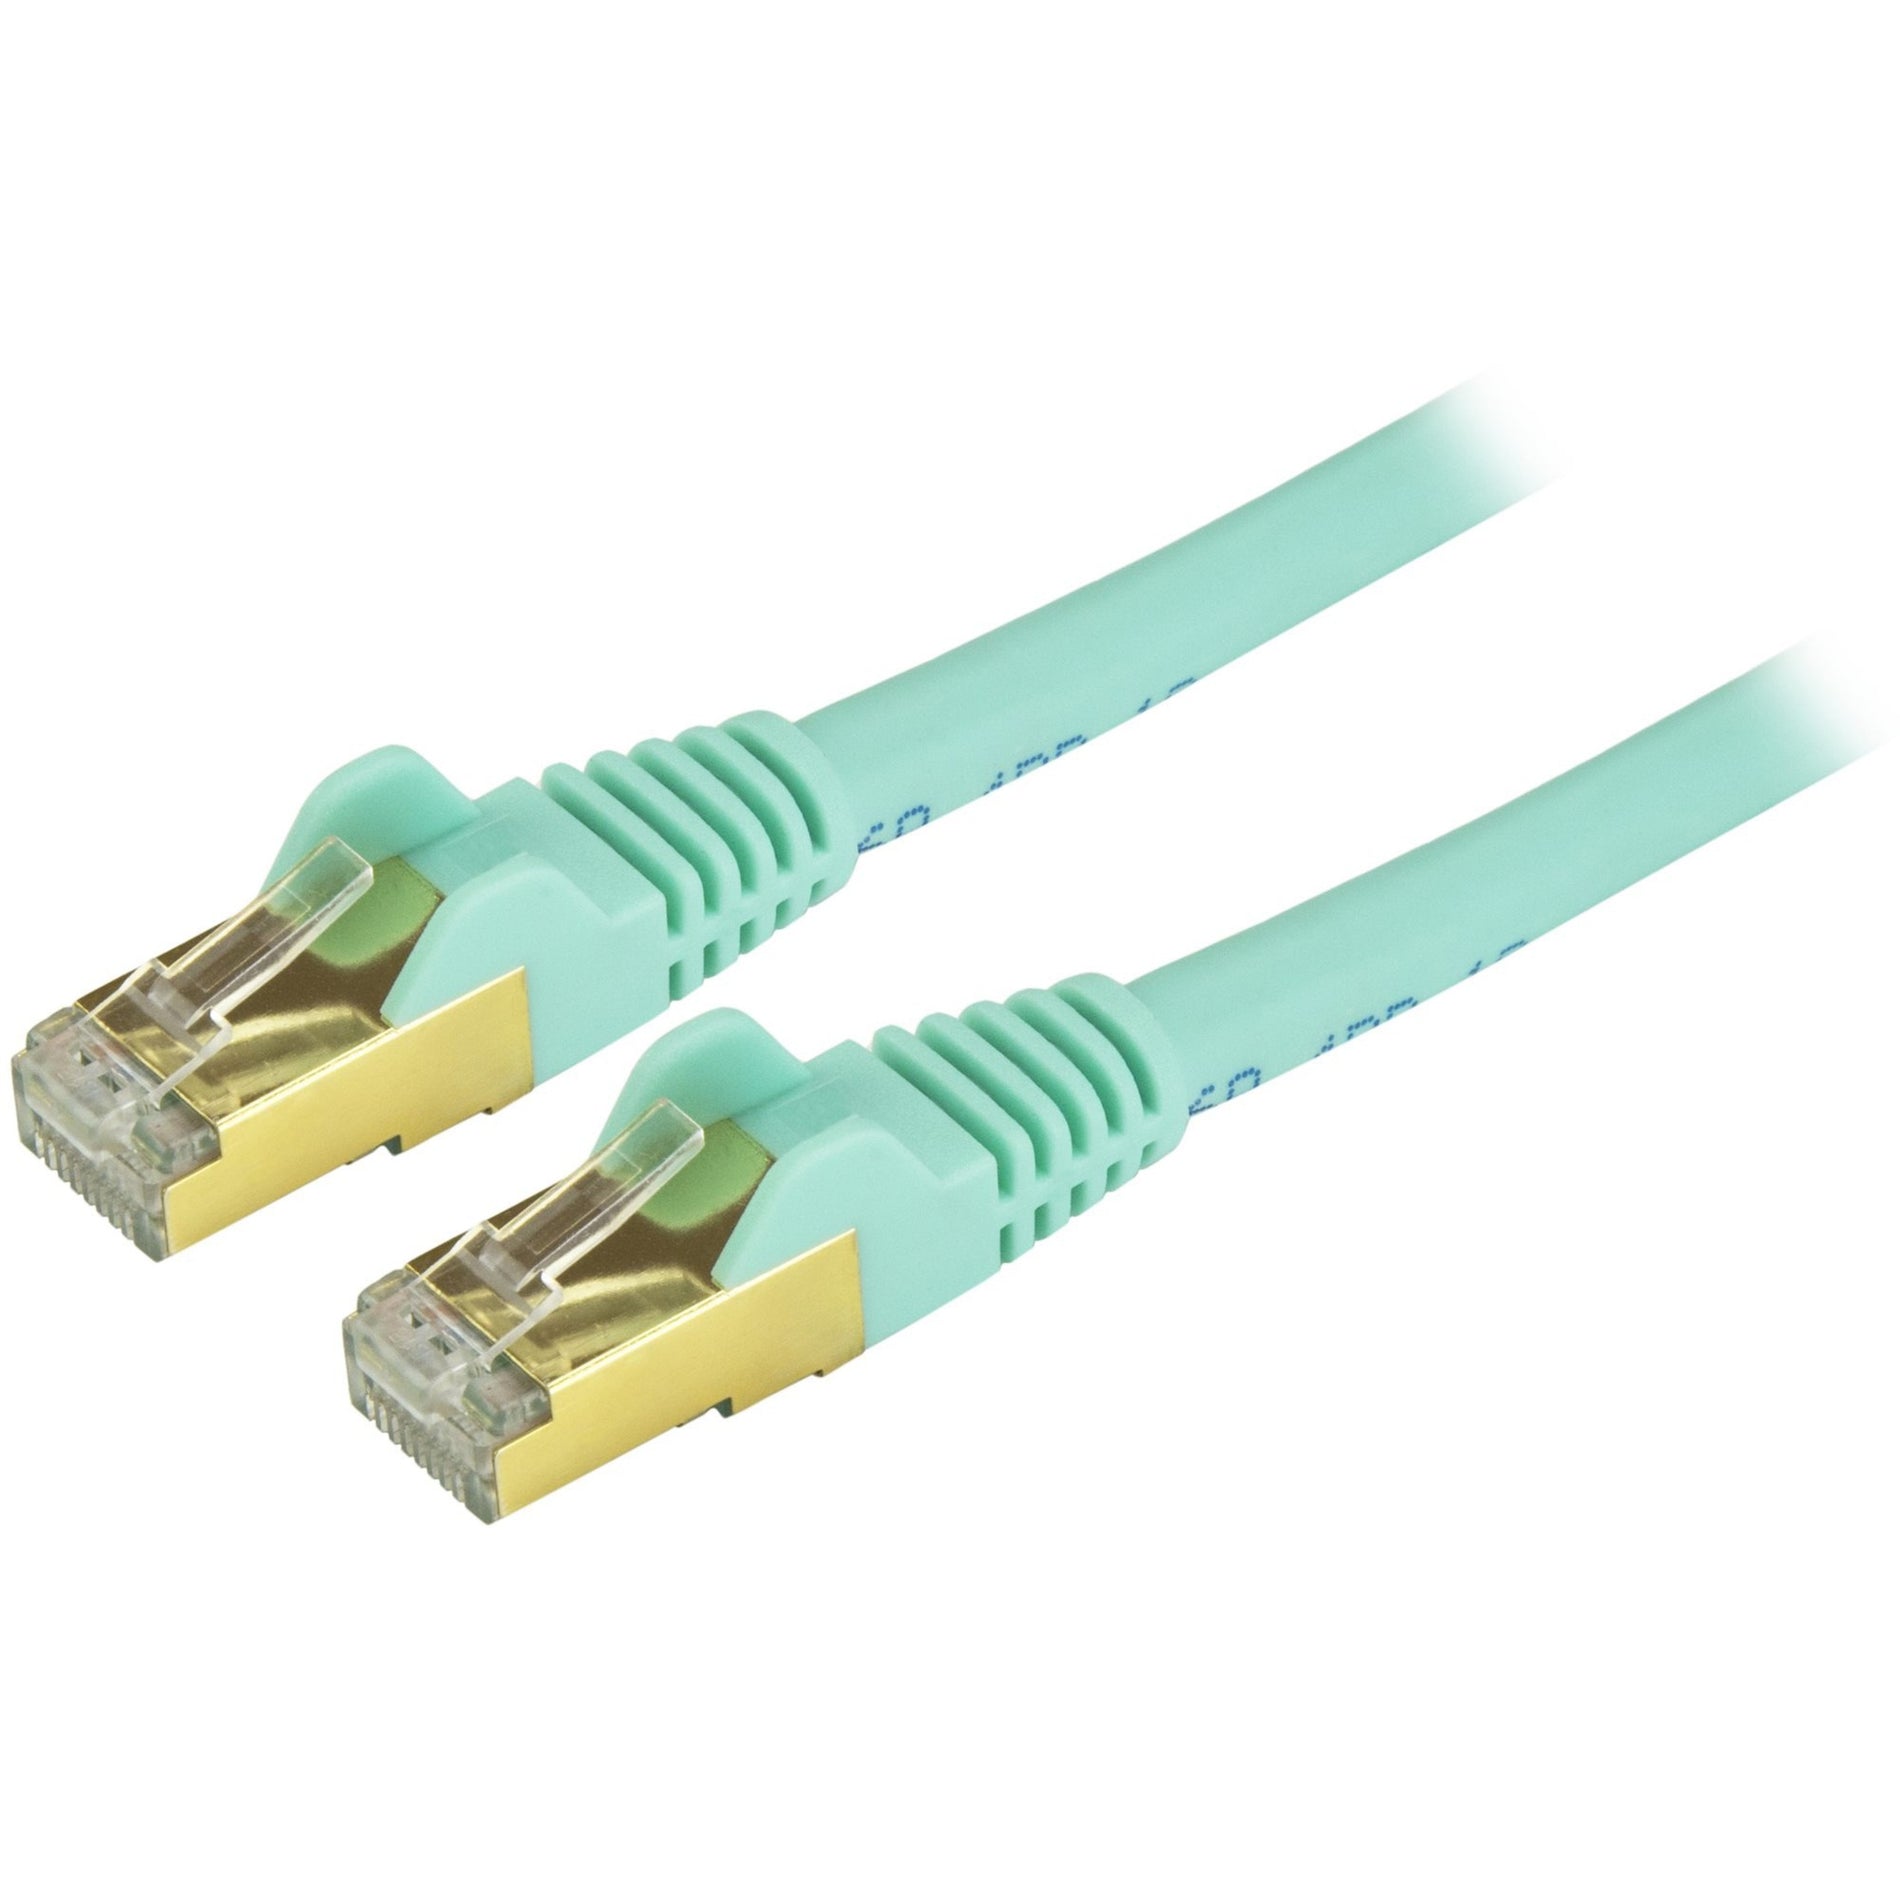 StarTech.com C6ASPAT6AQ Cat6a Ethernet Patch Cable - Shielded (STP) - 6 ft., Aqua, Snagless RJ45 Ethernet Cord